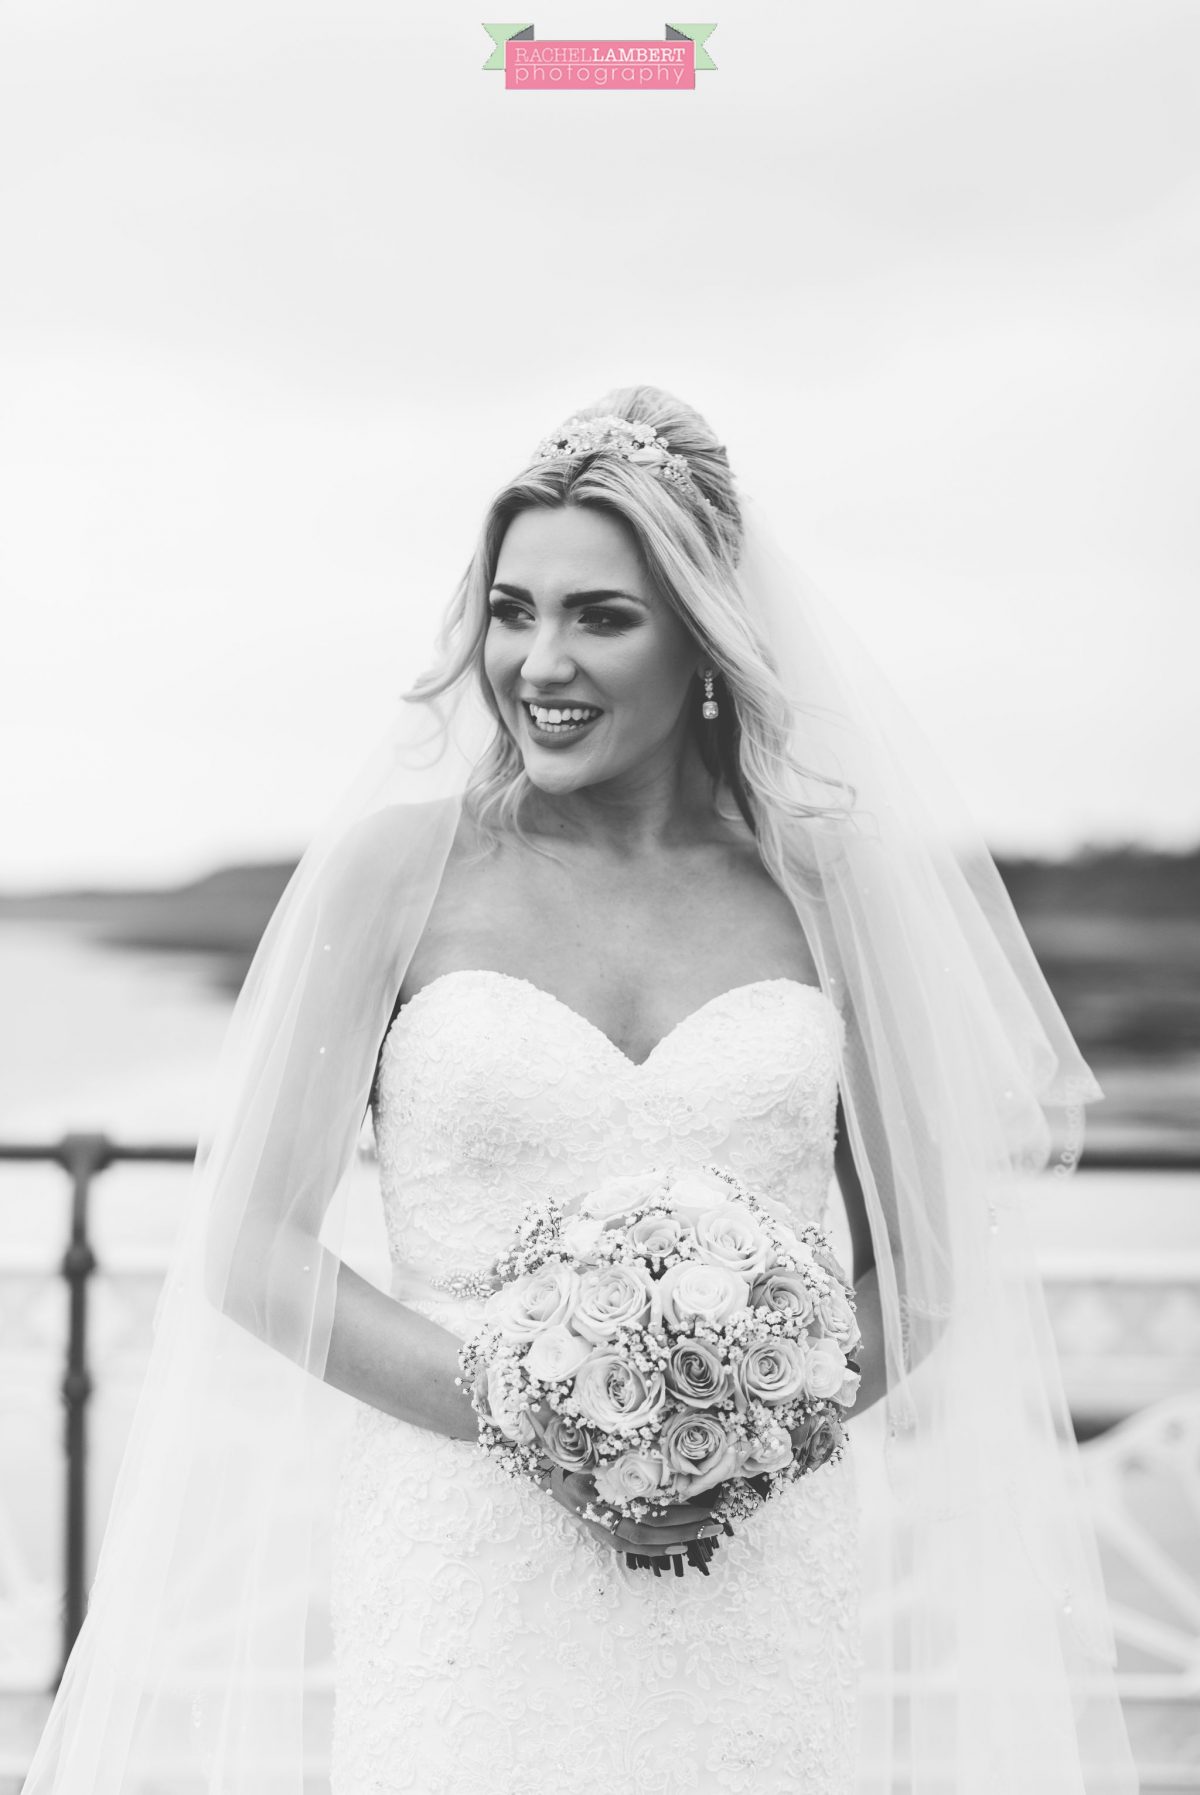 rachel lambert photography bride penarth pier